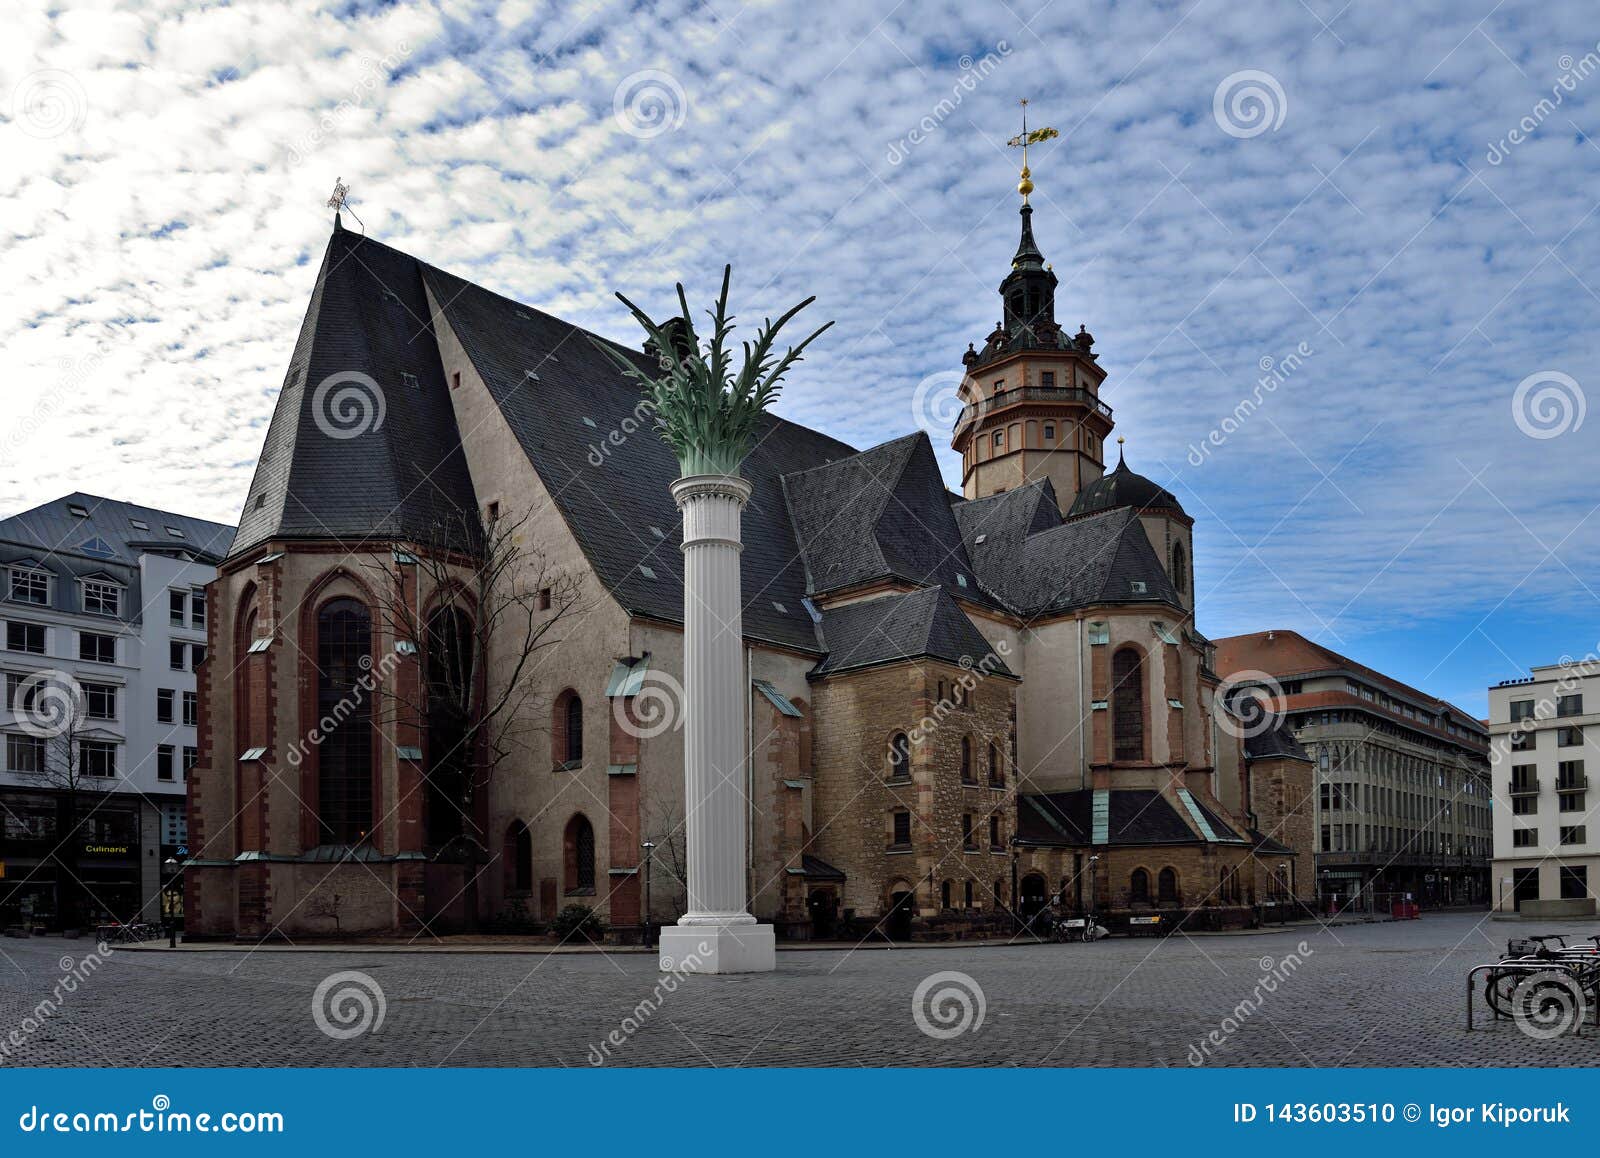 St. Nicholas Church, Leipzig Editorial - altstadt, nicholas: 143603510